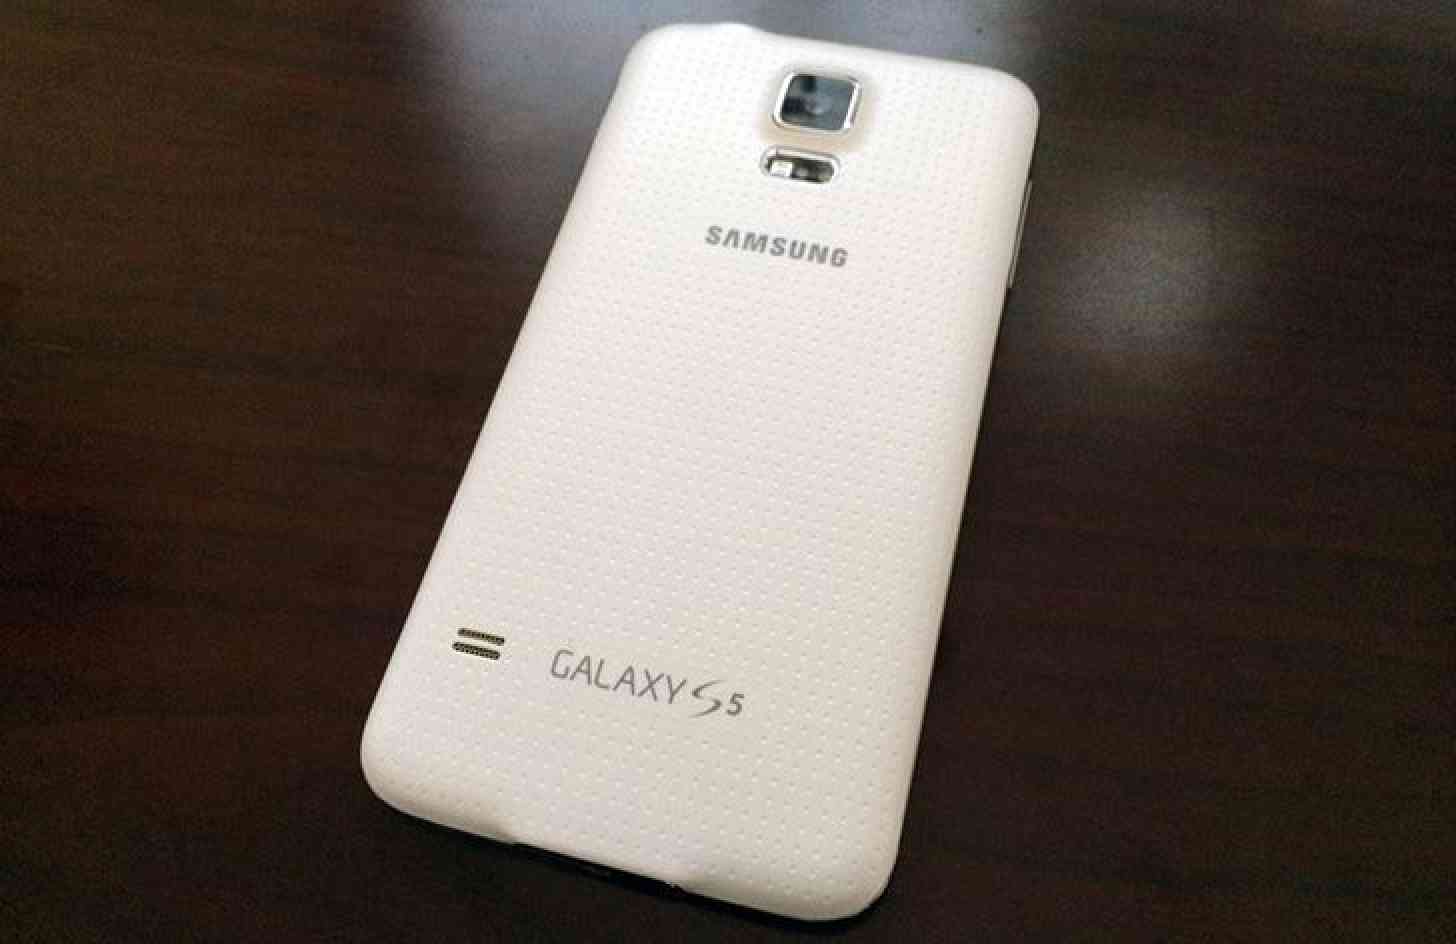 Samsung Galaxy S5 rear